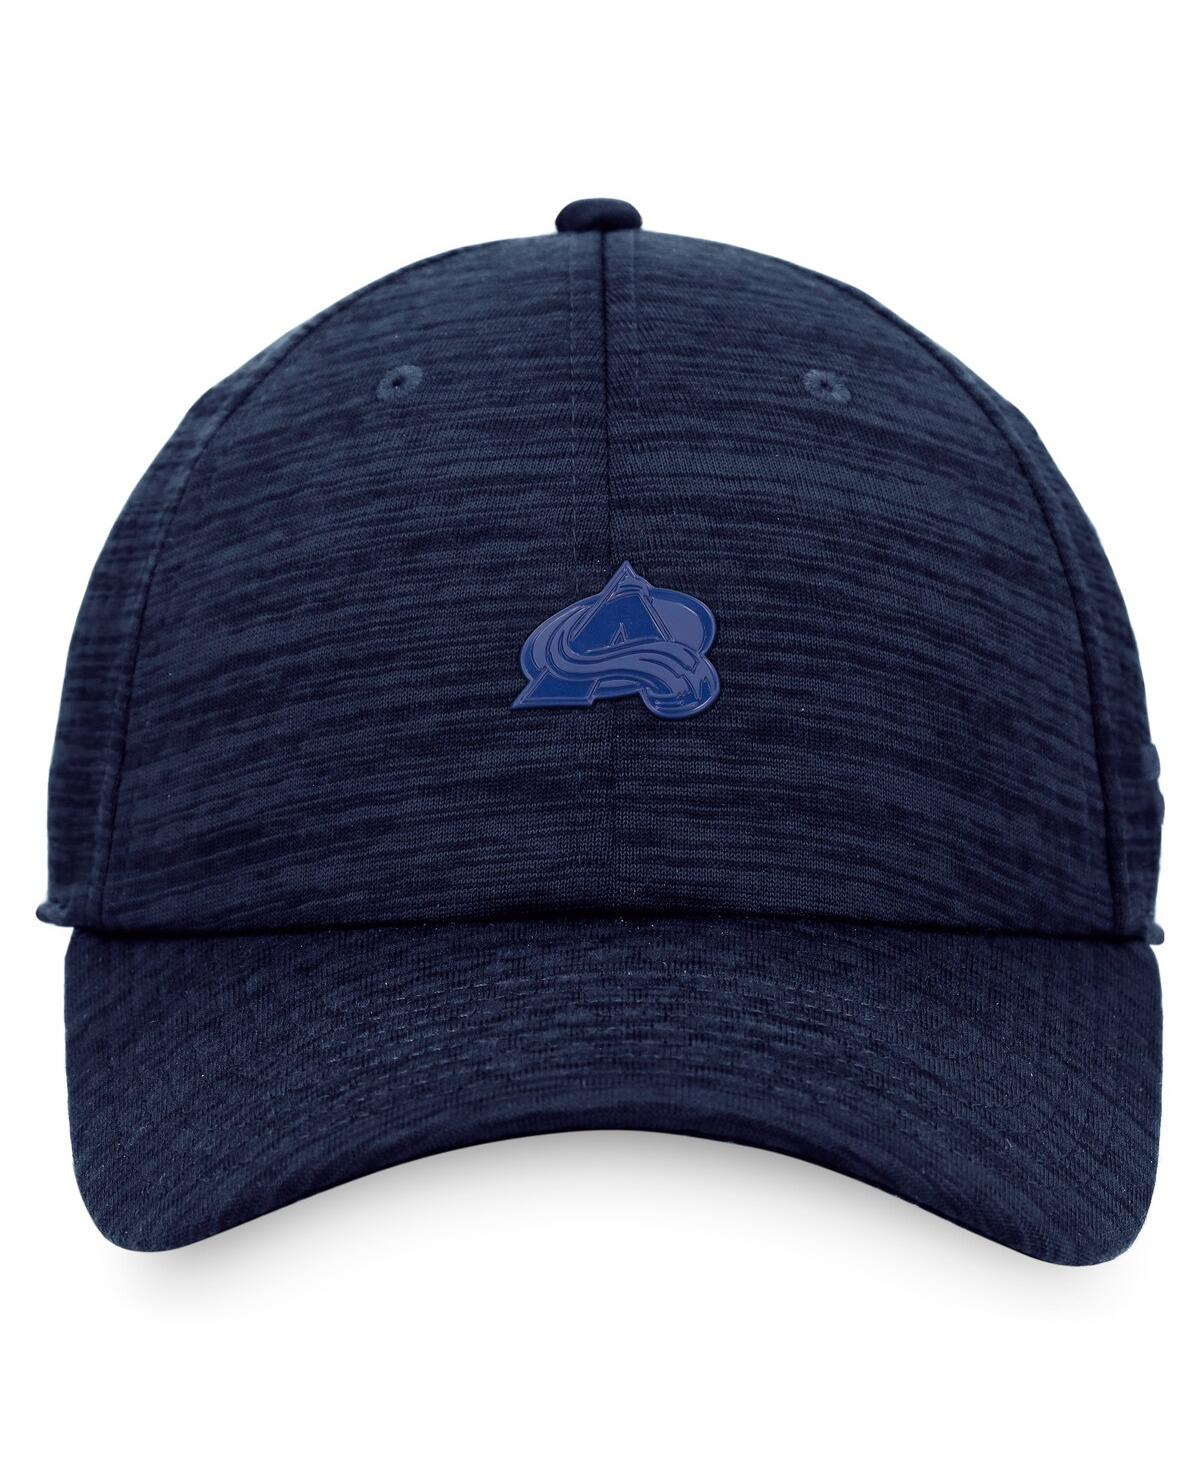 Shop Fanatics Men's  Navy Colorado Avalanche Authentic Pro Road Snapback Hat